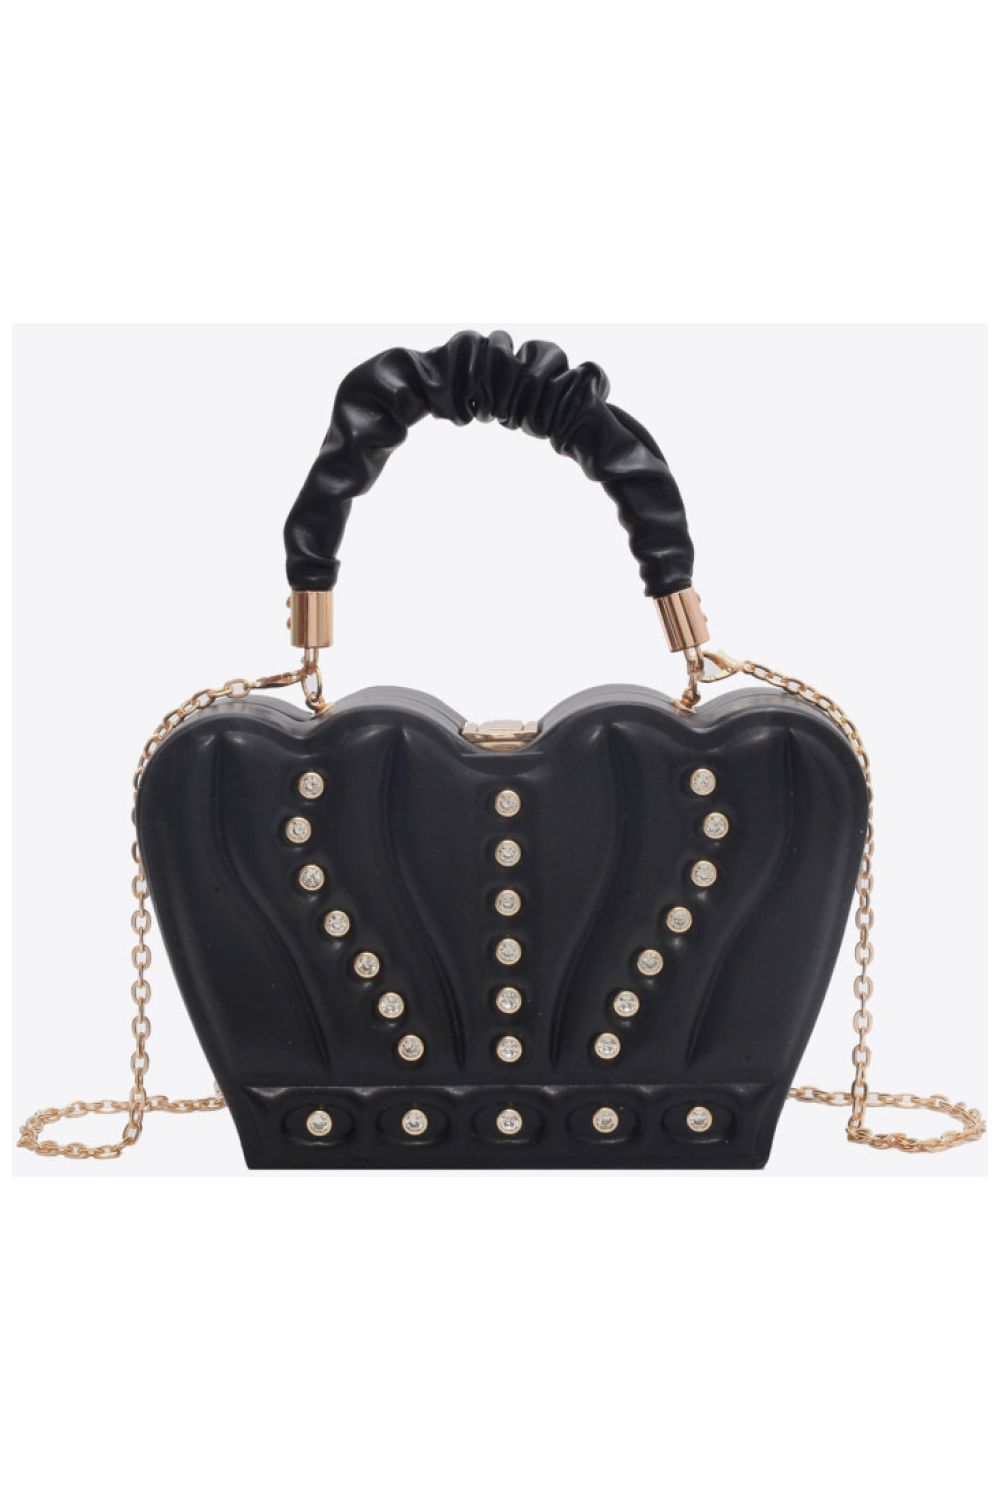 PU Leather Convertible Handbag.